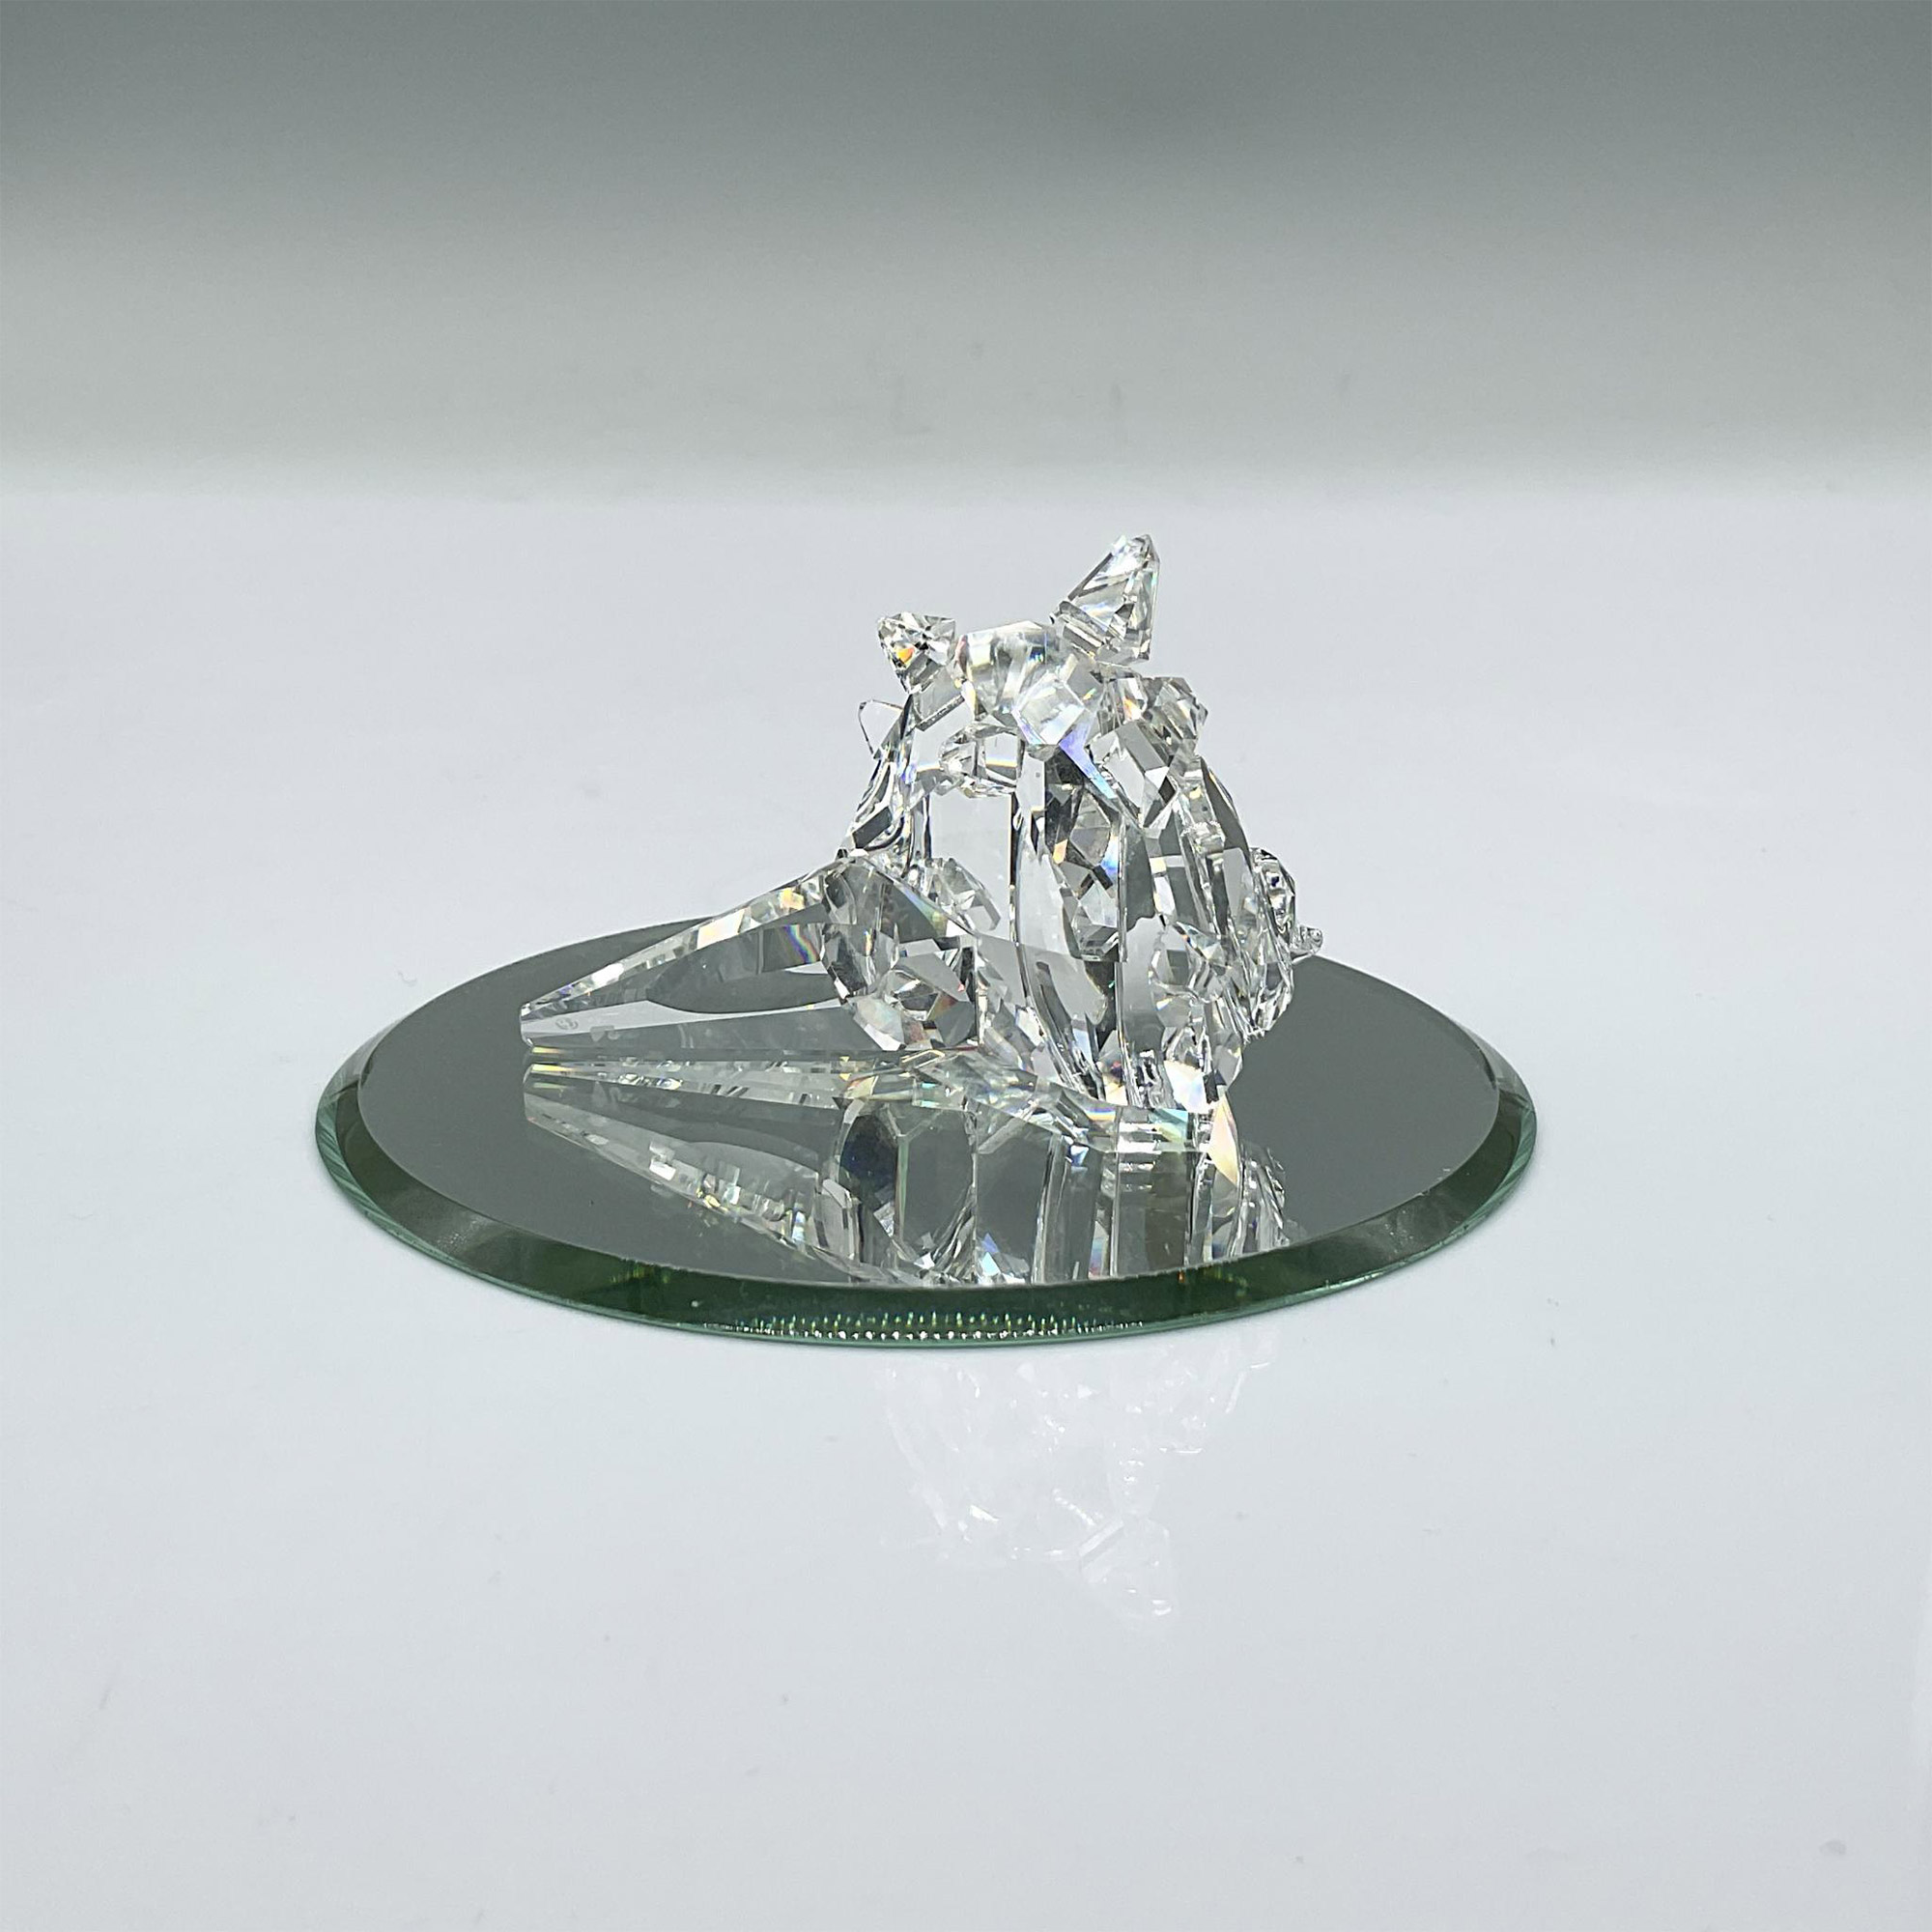 Swarovski Silver Crystal Figure, South Sea Shell - Image 2 of 4